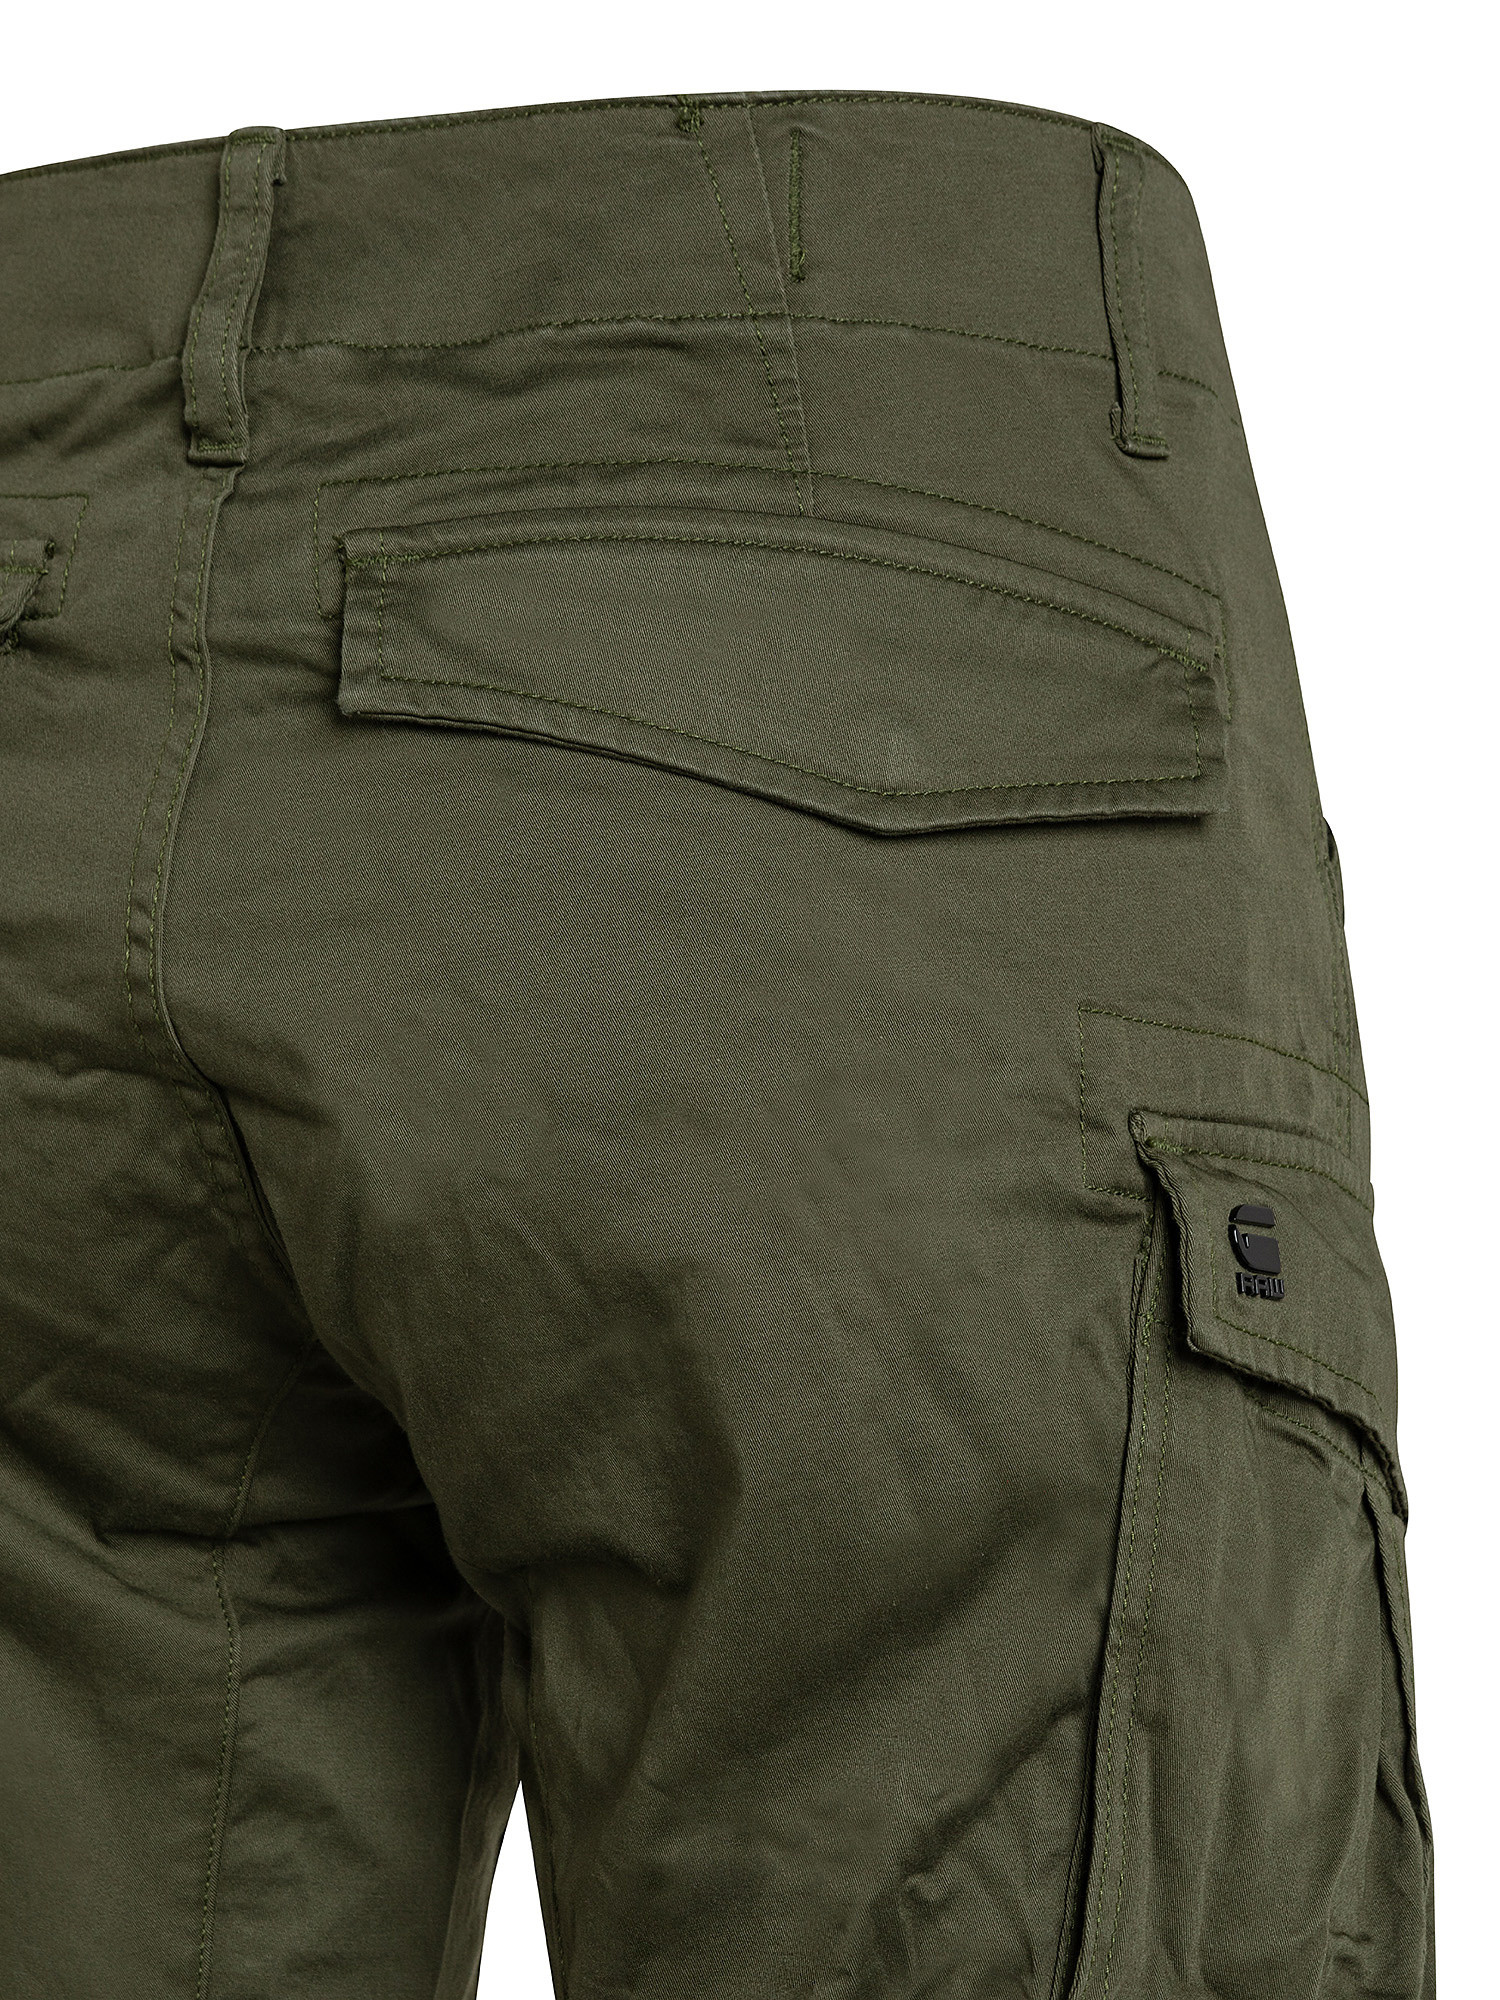 G-Star Cargo Pants, Olive Green, large image number 2